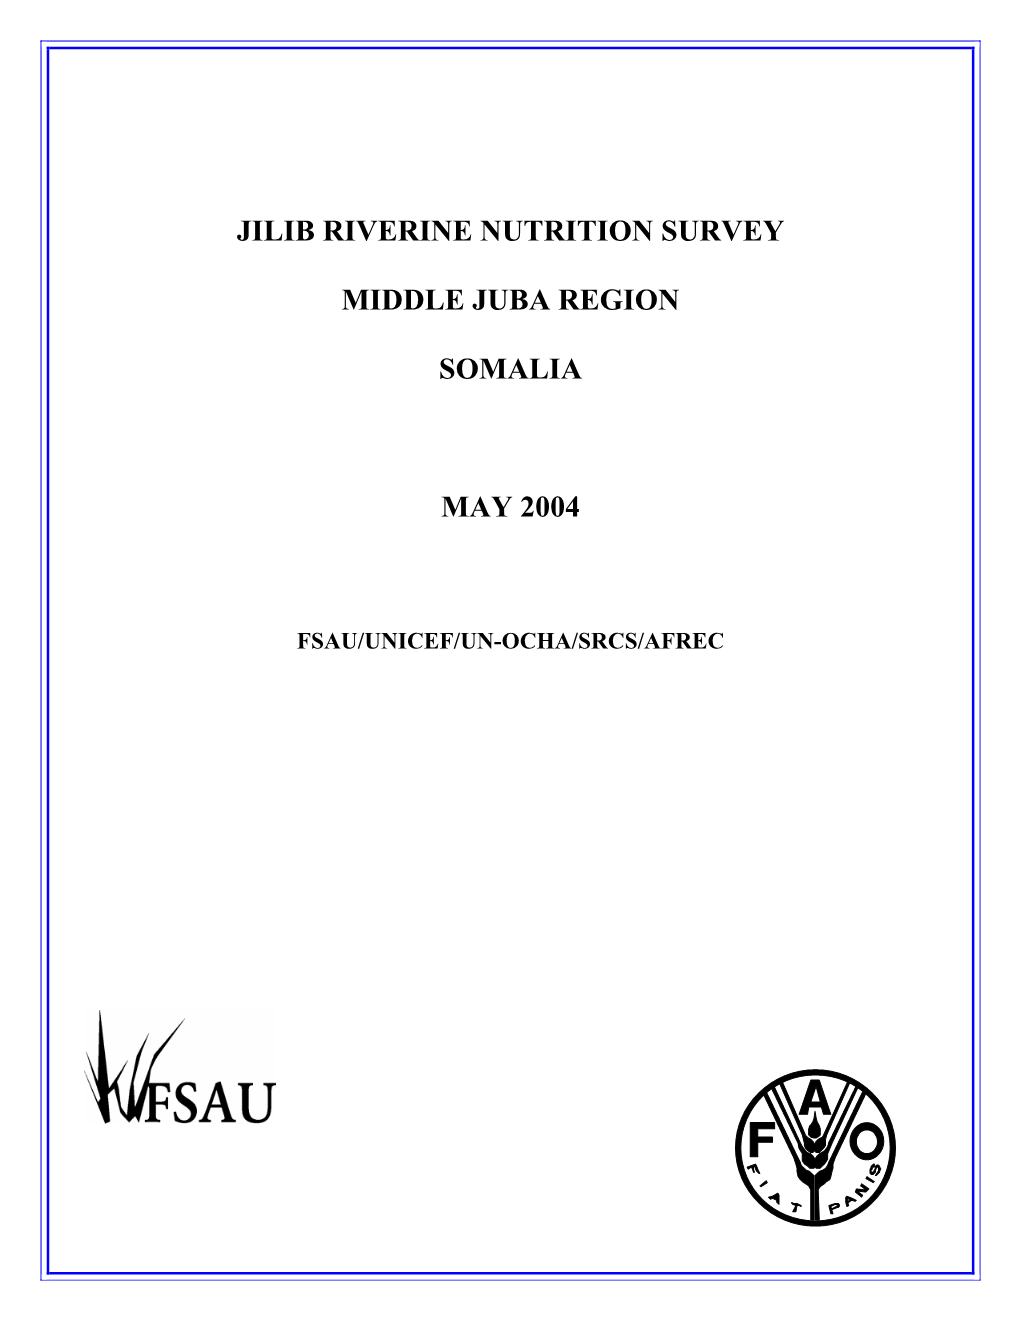 Jilib Riverine Nutrition Survey Middle Juba Region Somalia